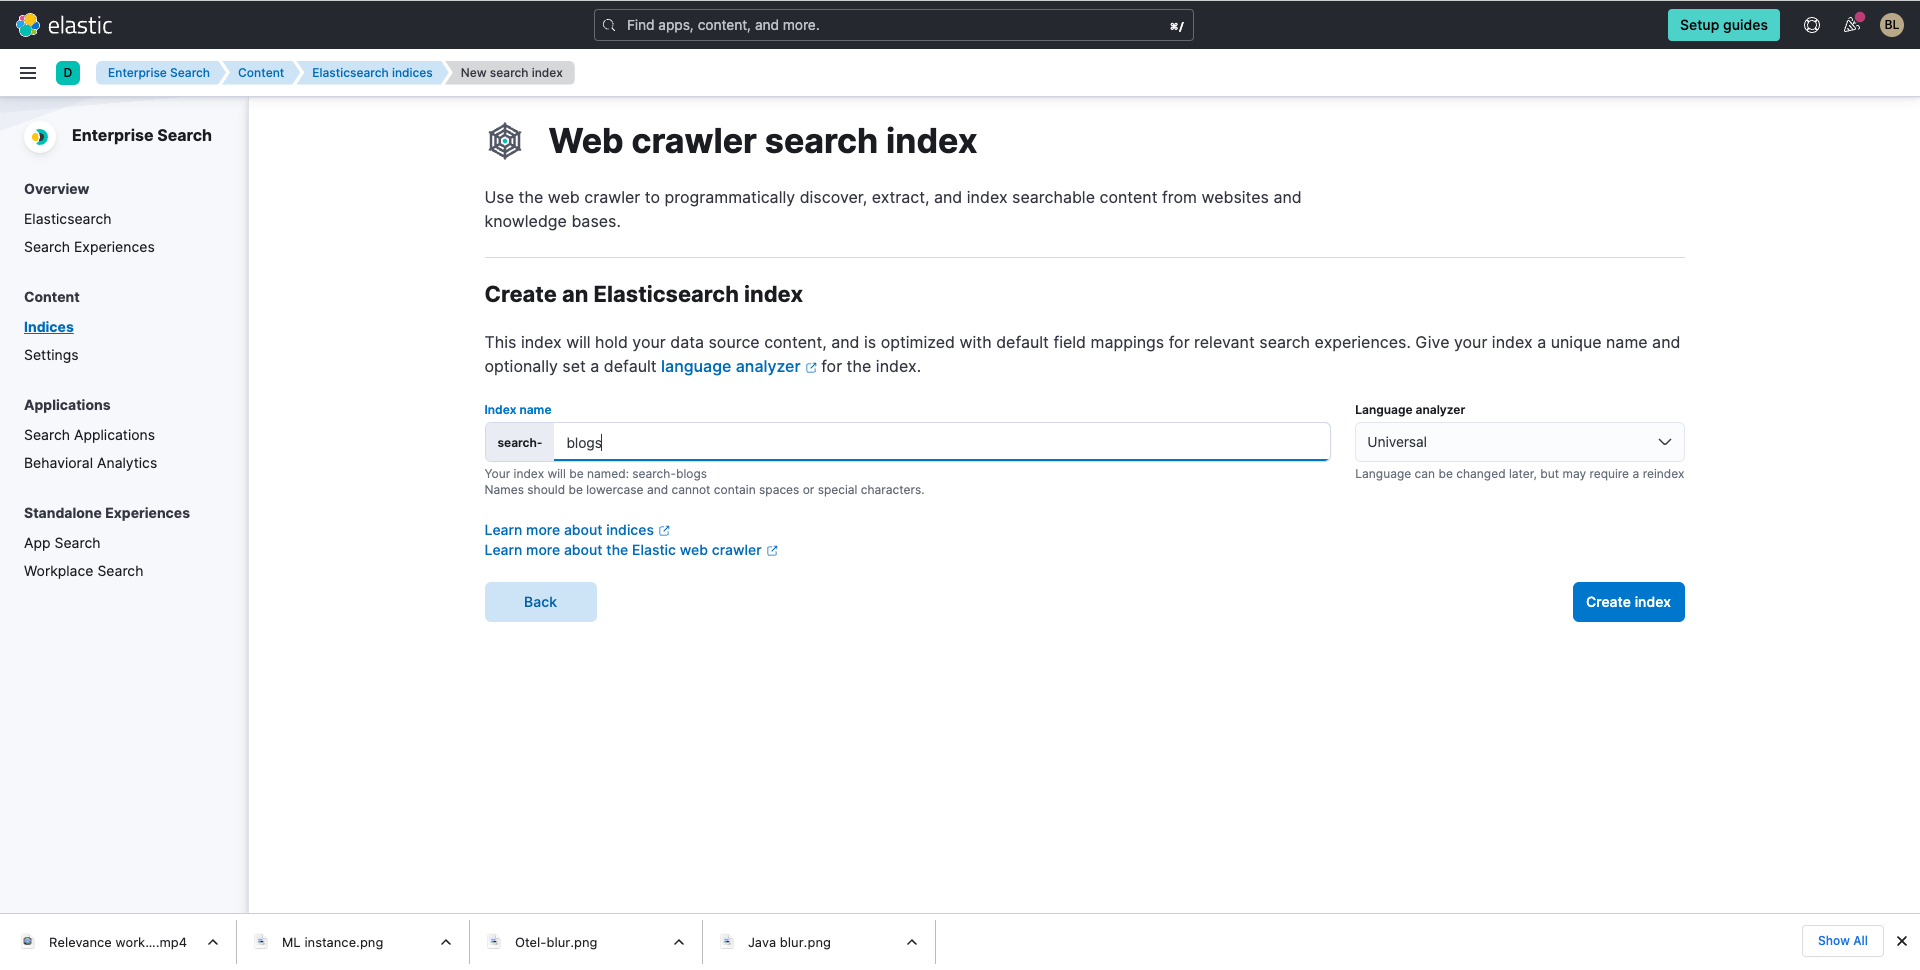 Web crawler search index